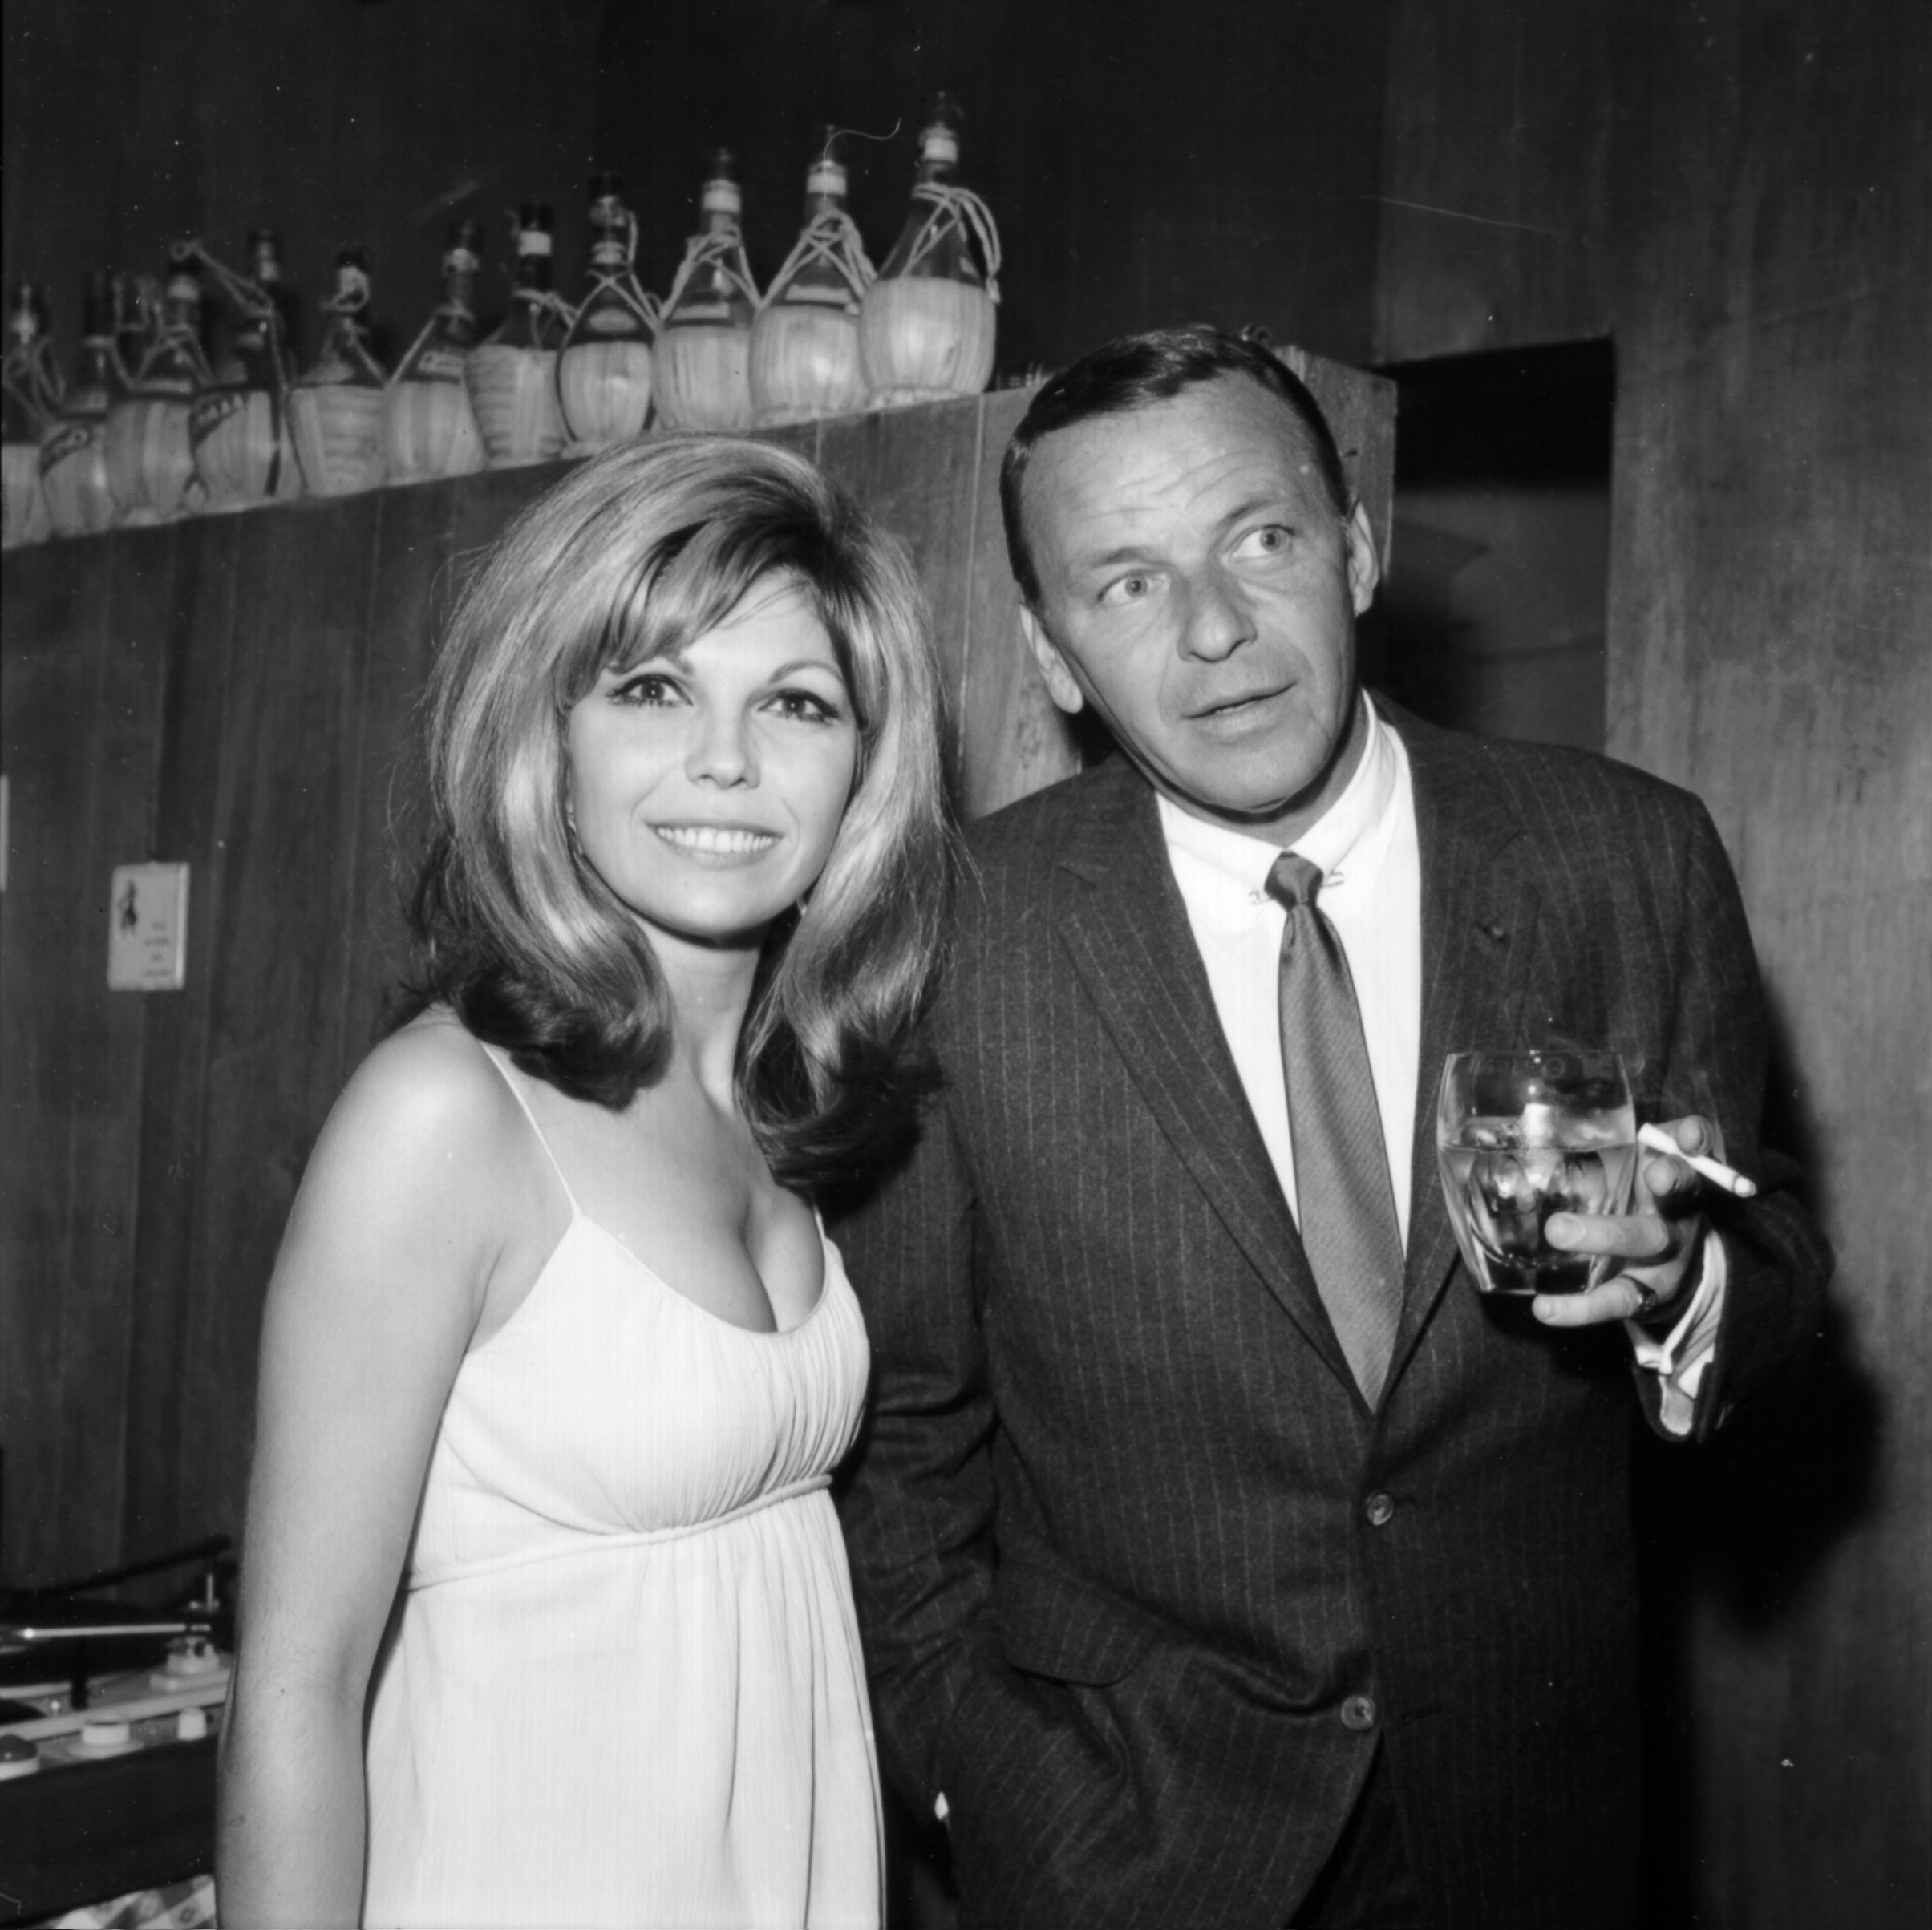 Nancy Sinatra and Frank Sinatra near bottles